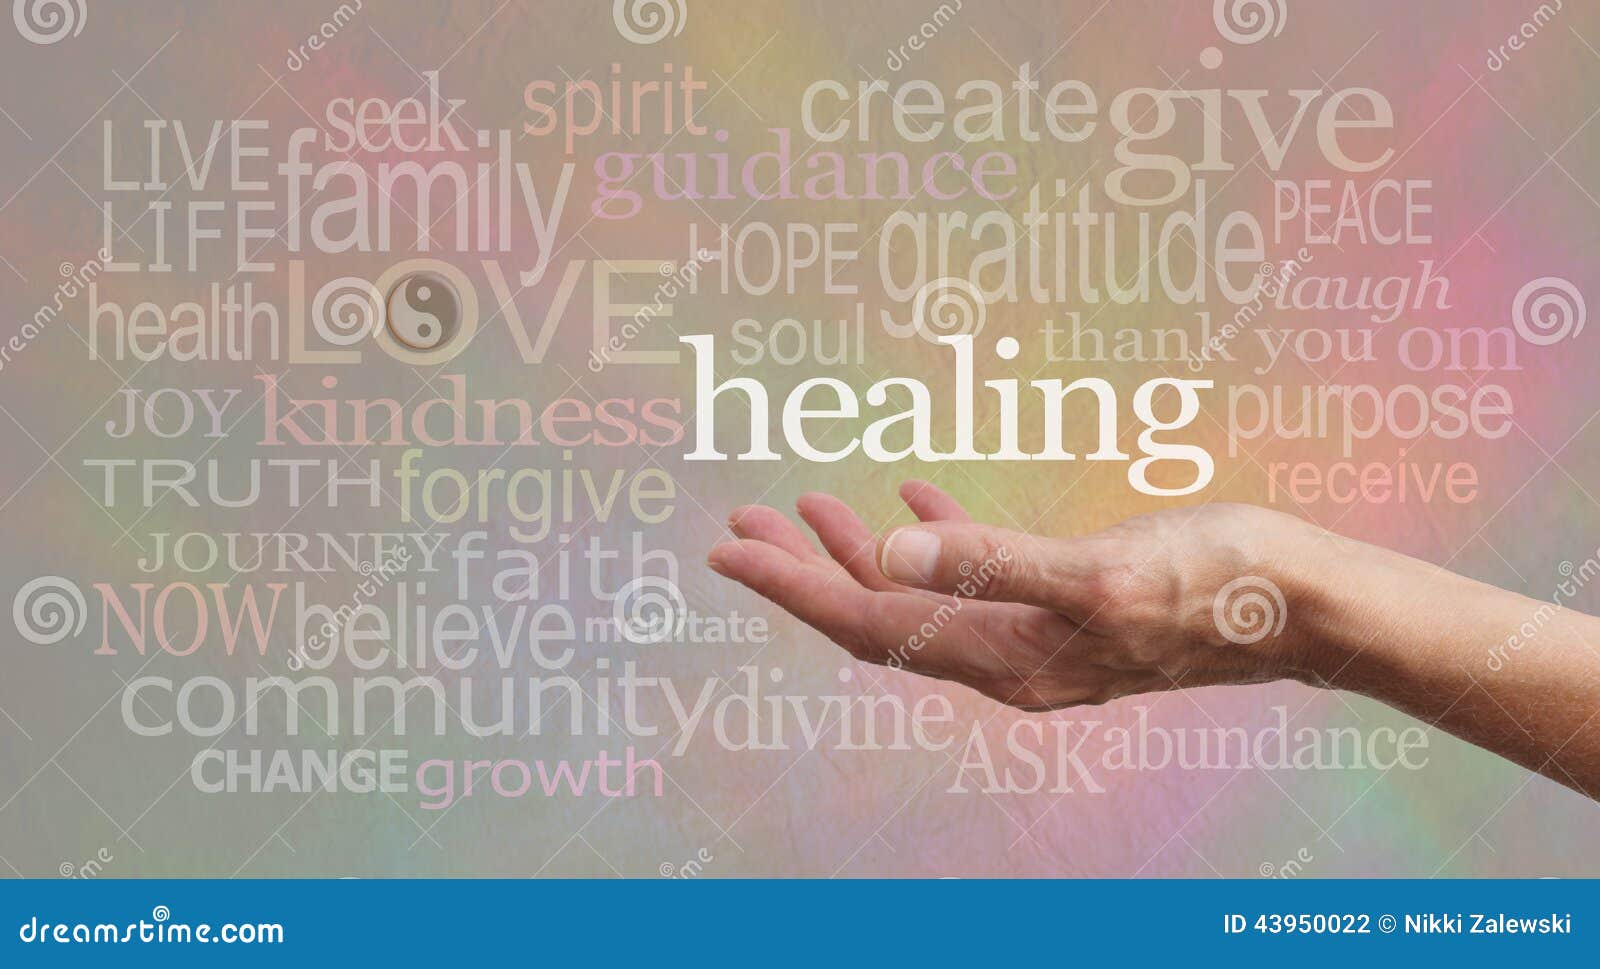 high resonance healing words on pastel background